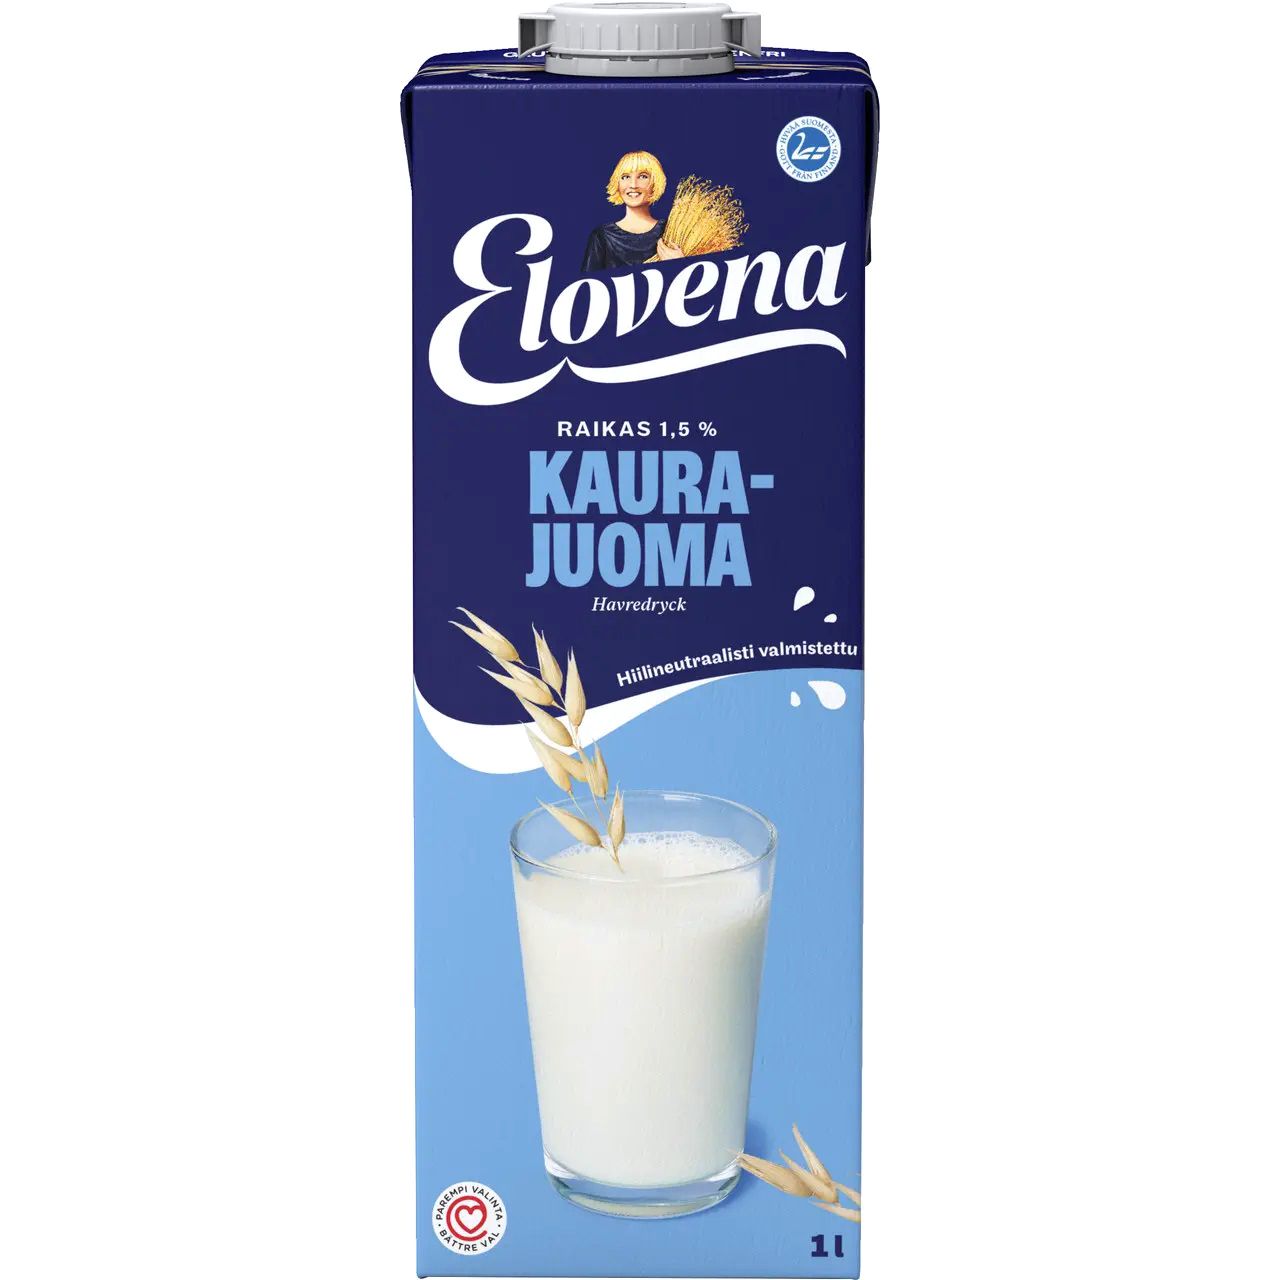 Овсяное молоко для каш Elovena Kaura-Juoma 1.5% 1 л - фото 1